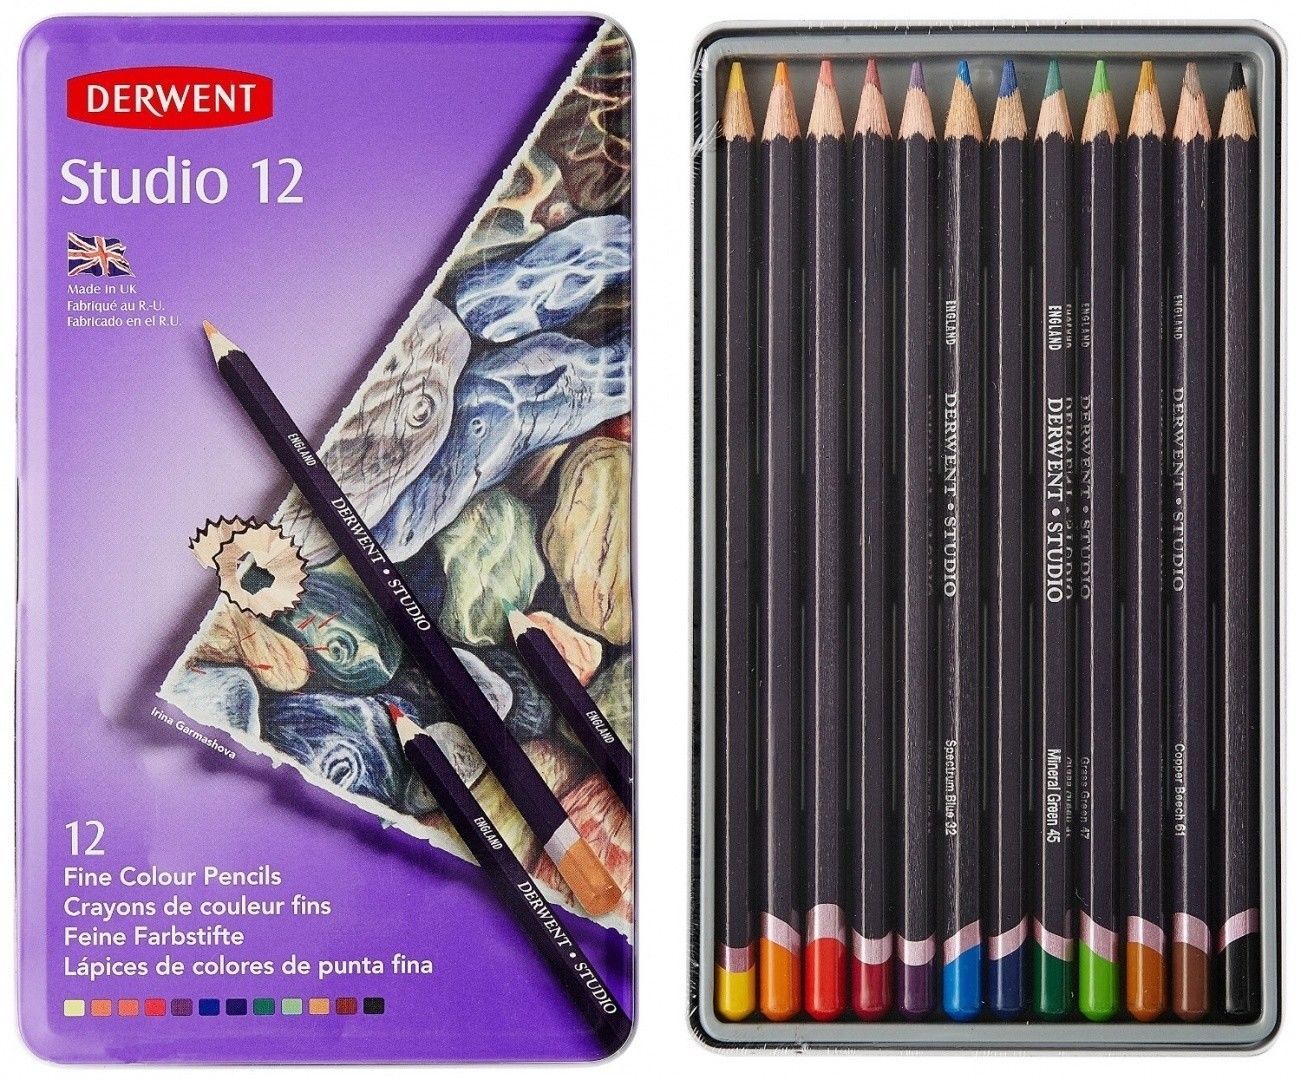 Derwent Studio Coloured Pencils in Tin Case R32196 - 12 Pack